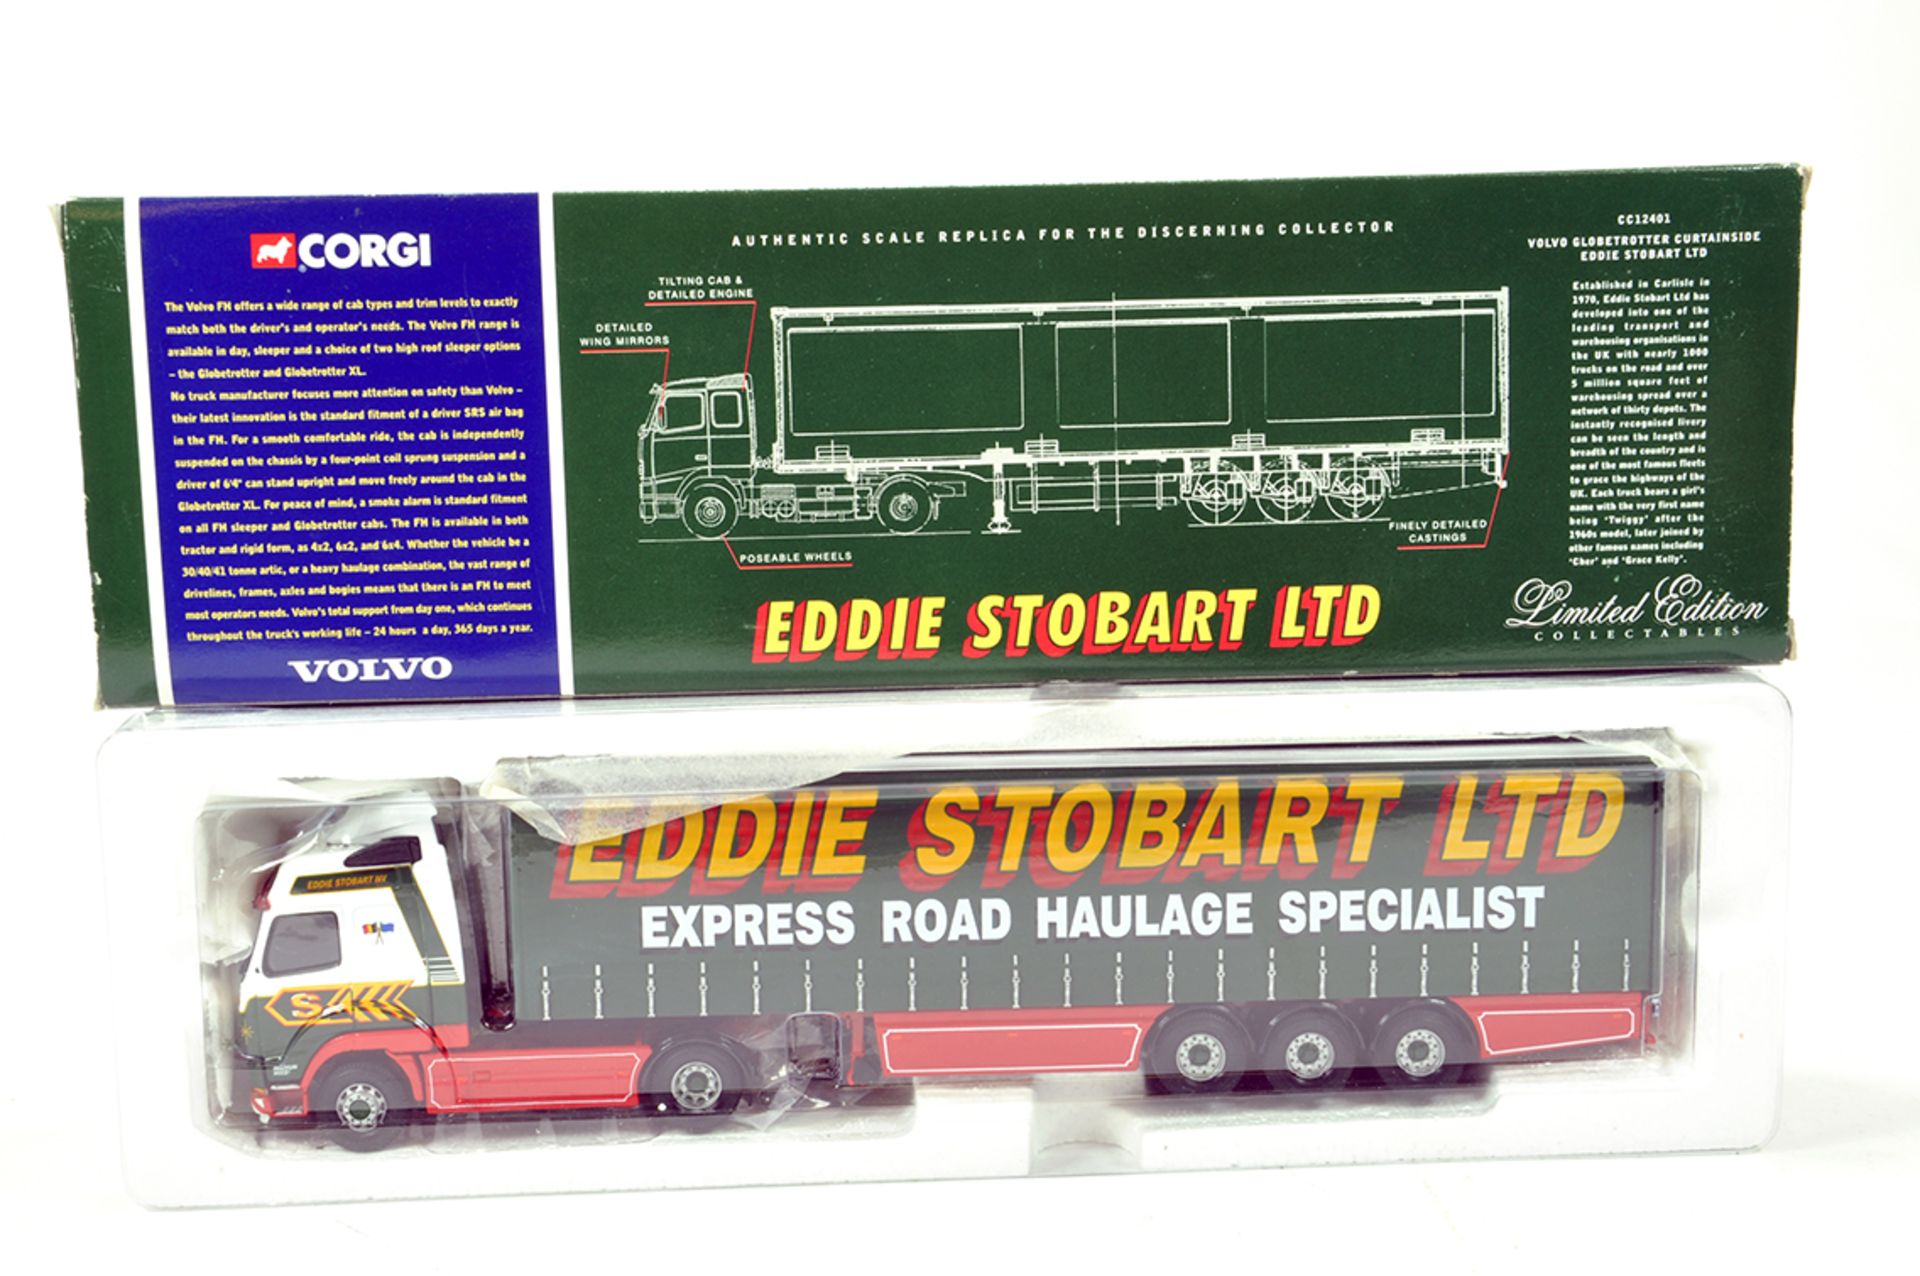 Corgi 1/50 Diecast Truck Issue Comprising CC12401 Volvo Curtainside Trailer in livery of Eddie